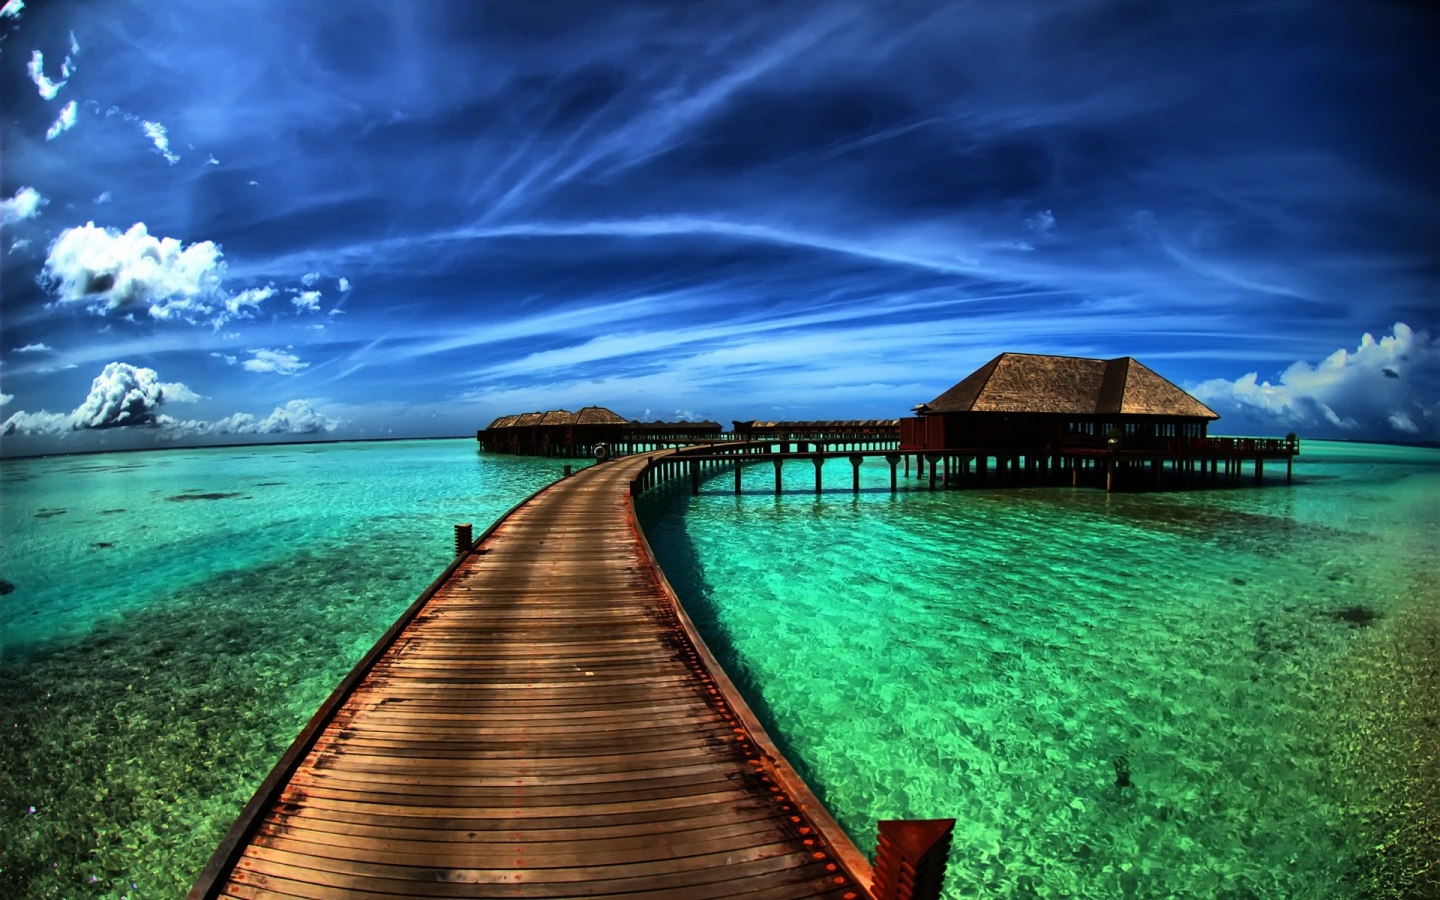 Amazing Sea Resort for 1440 x 900 widescreen resolution